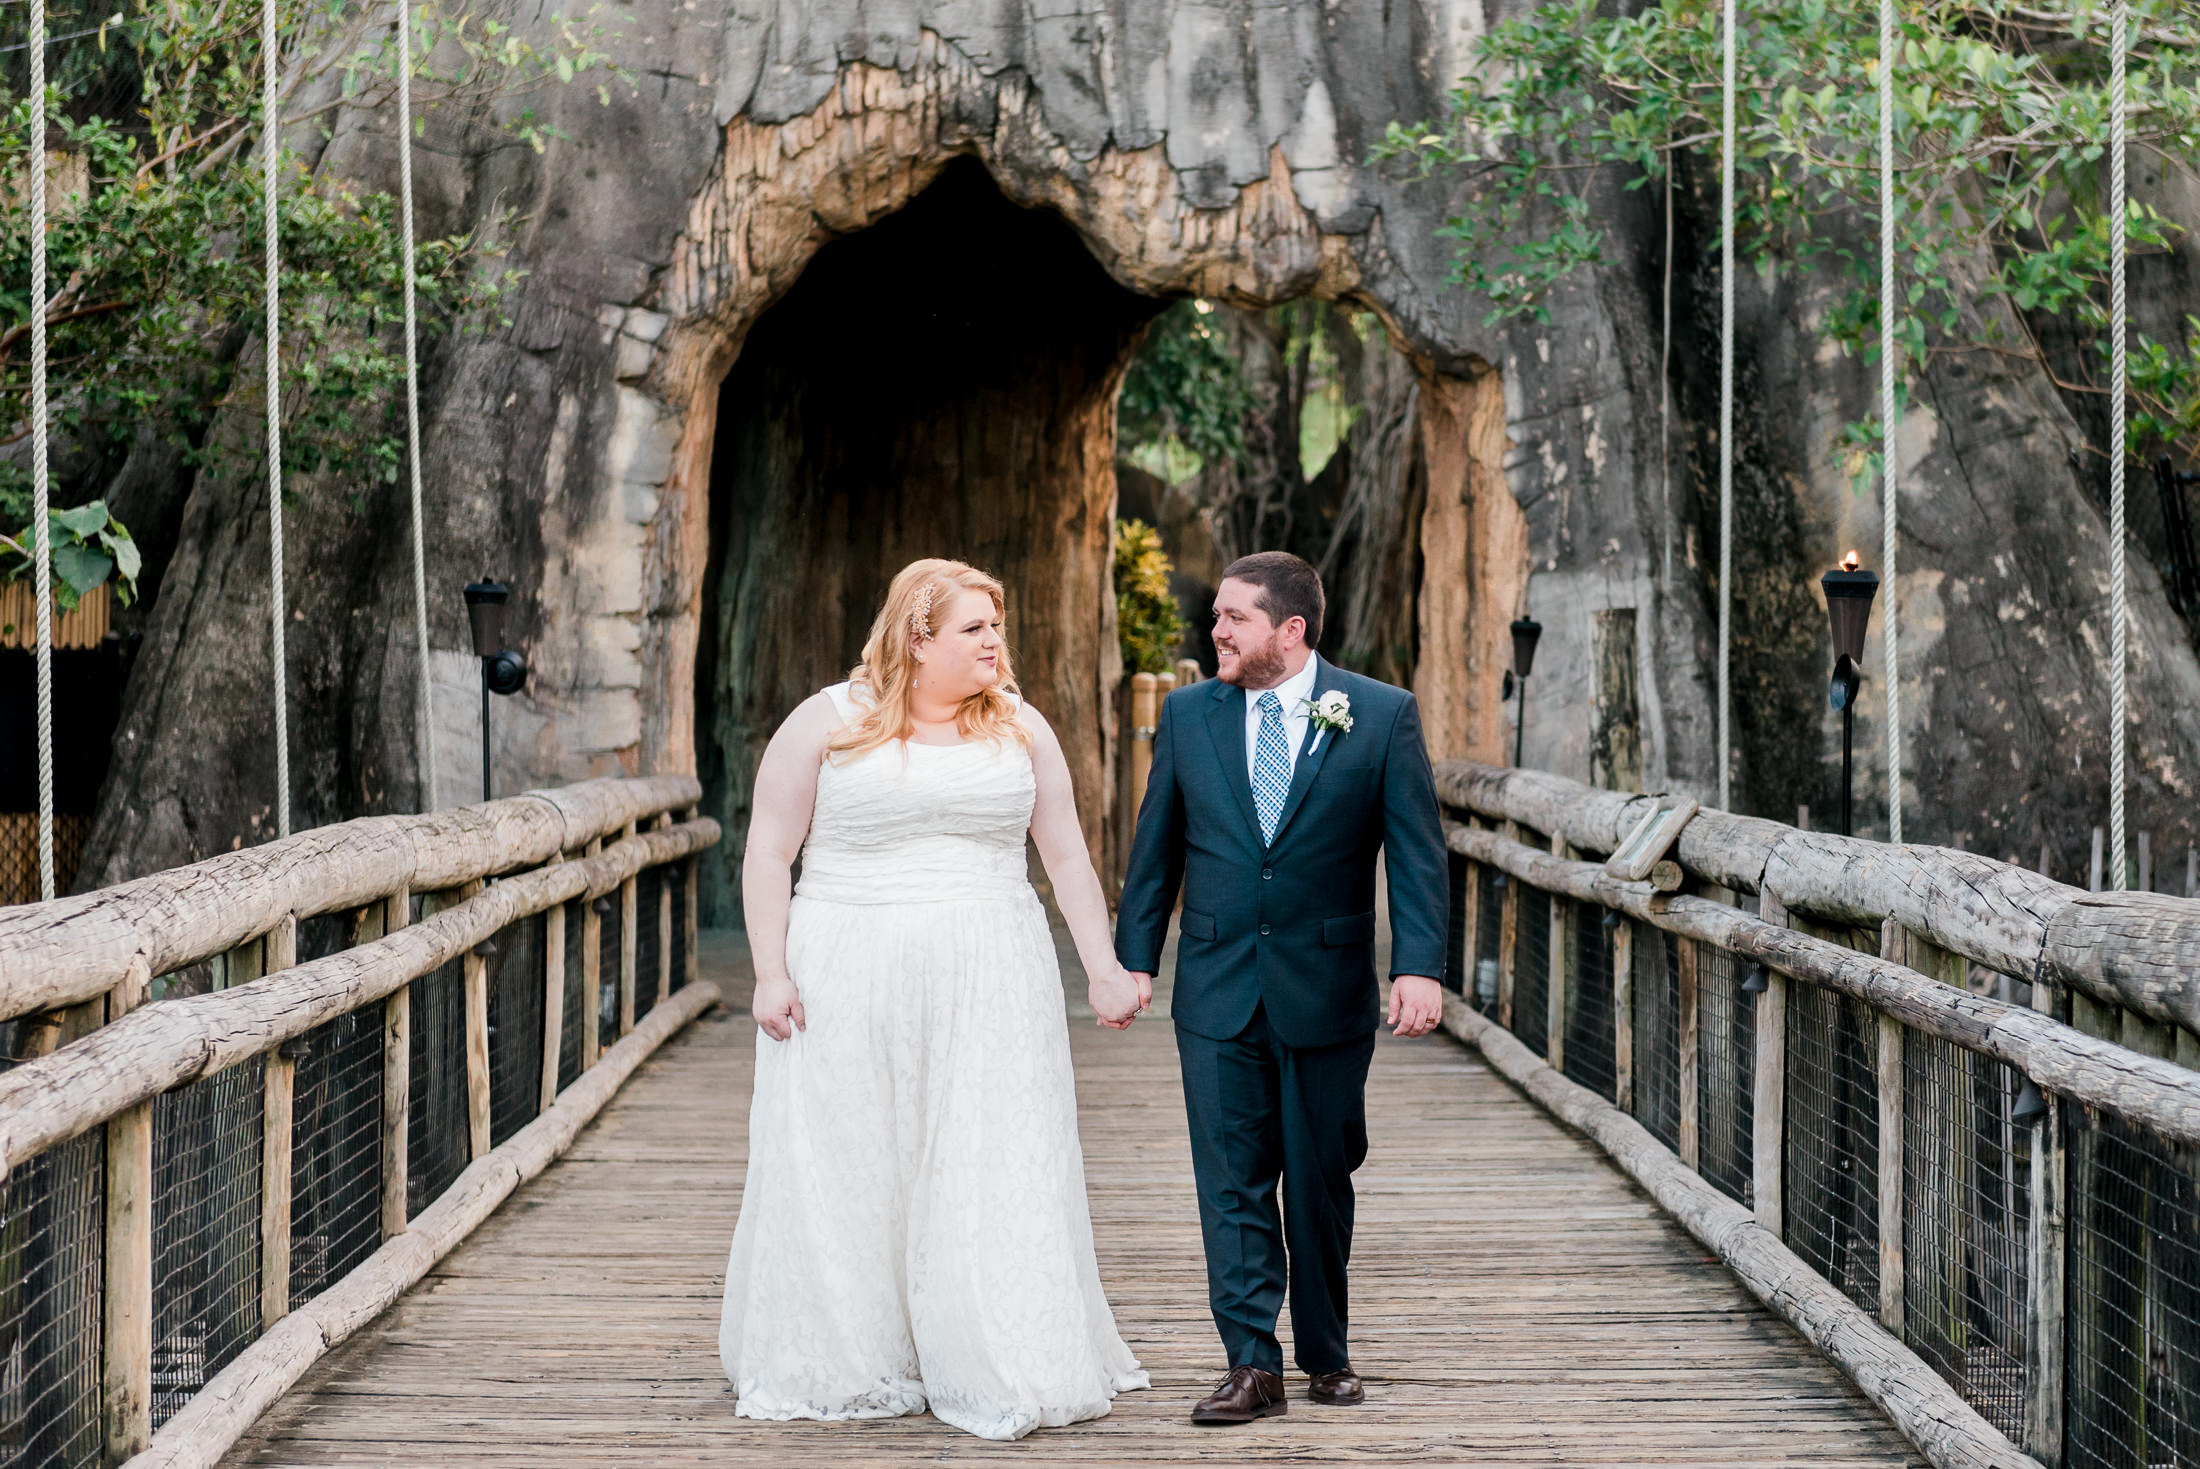 A wedding couple takes portraits at their palm beach zoo wedding.